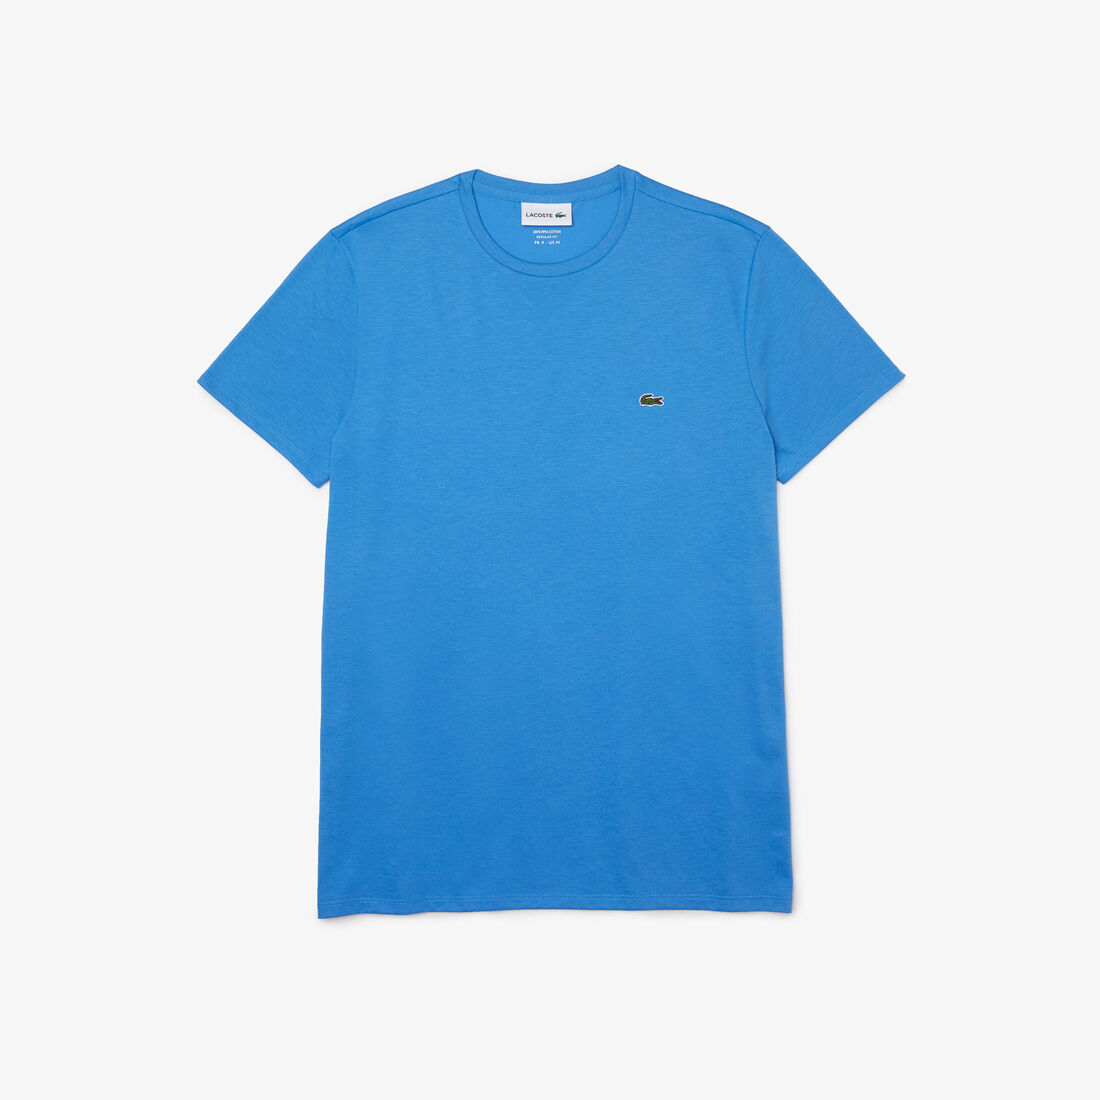 Lacoste Crew Neck Pima Baumwoll Jersey T-shirts Herren Blau | PCDK-09672